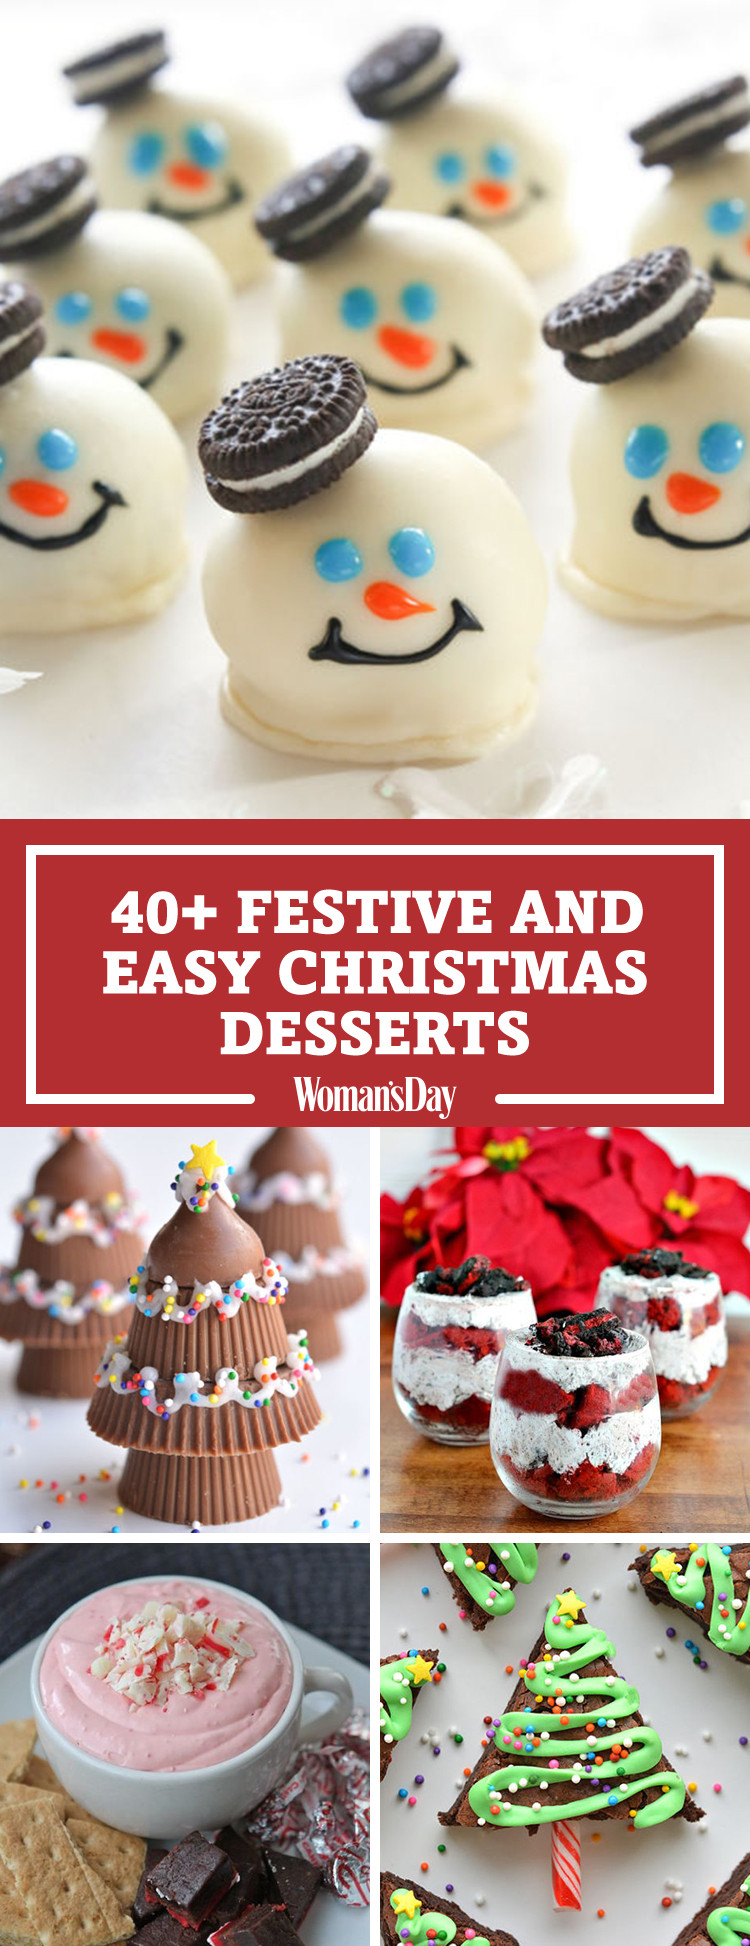 Best Easy Christmas Desserts
 57 Easy Christmas Dessert Recipes Best Ideas for Fun